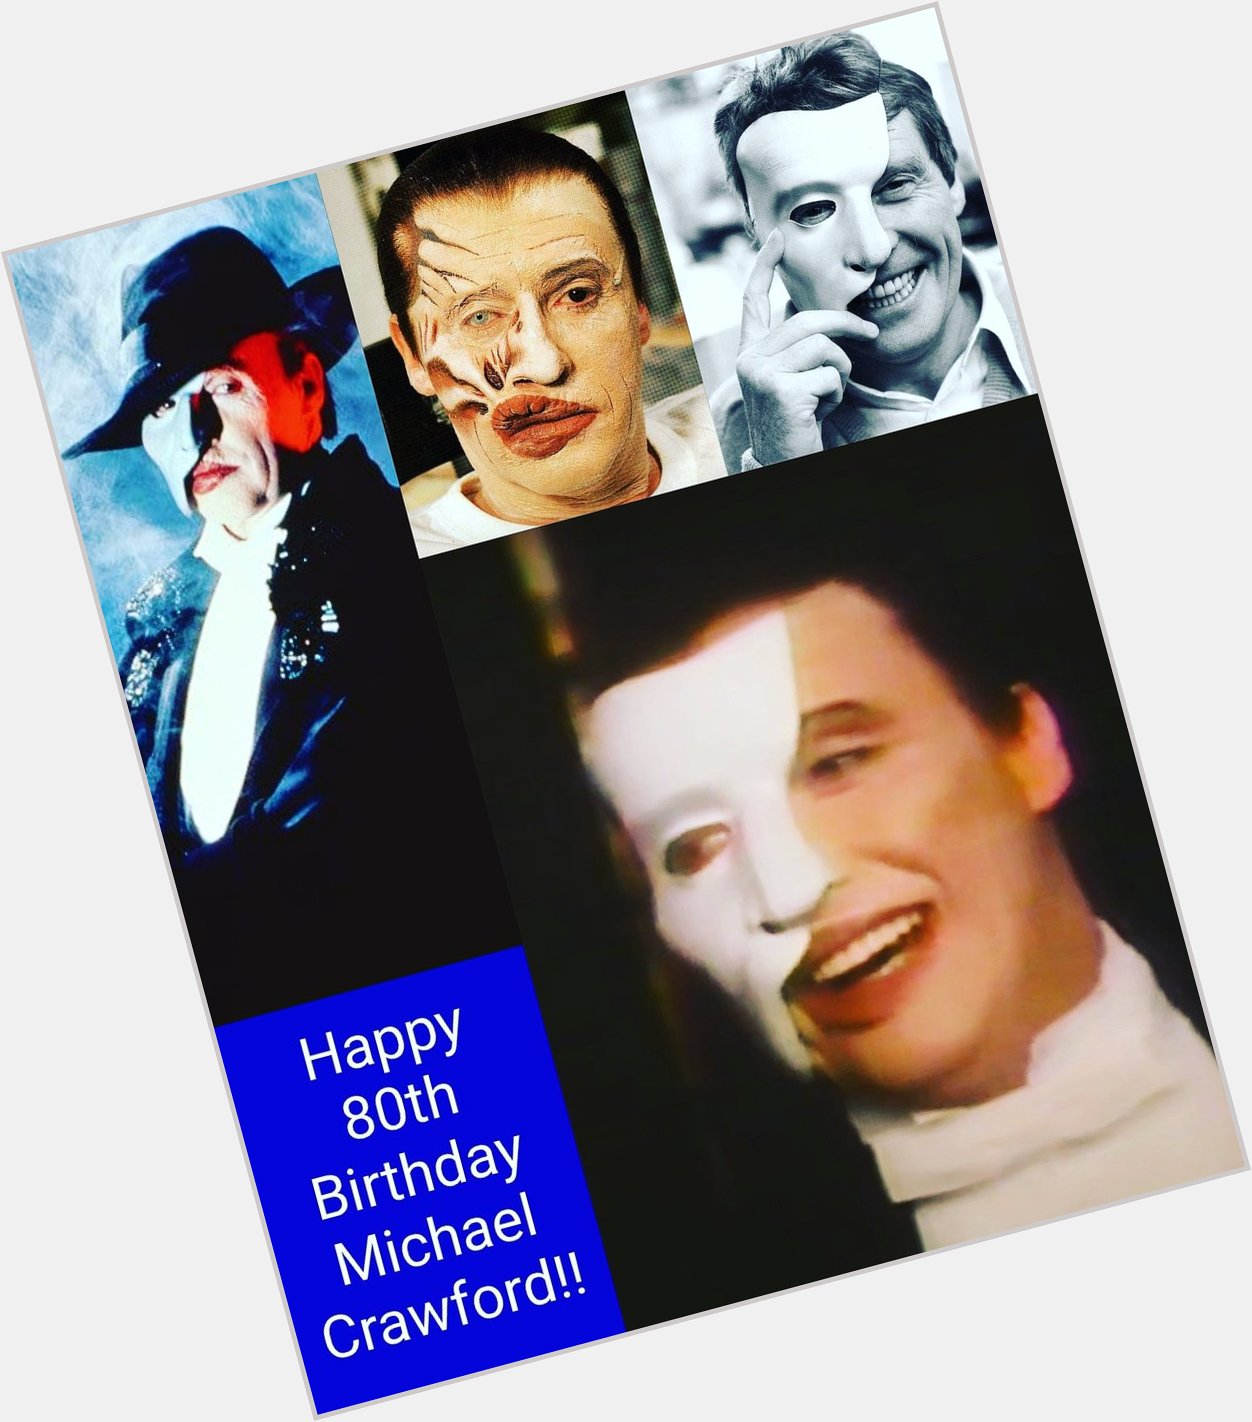 Happy 80th birthday Michael Crawford!!   